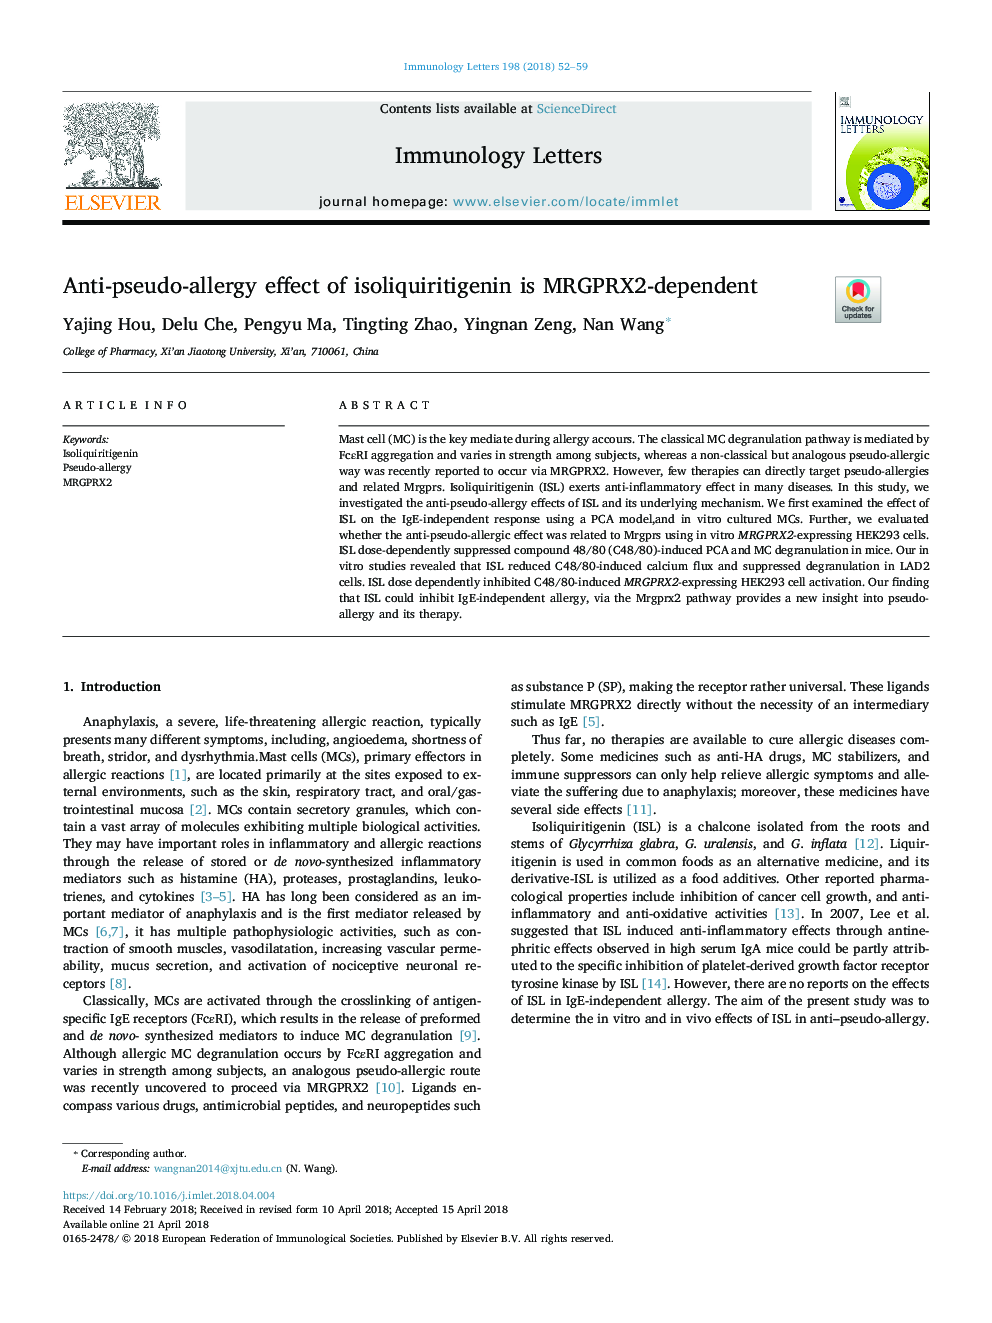 Anti-pseudo-allergy effect of isoliquiritigenin is MRGPRX2-dependent